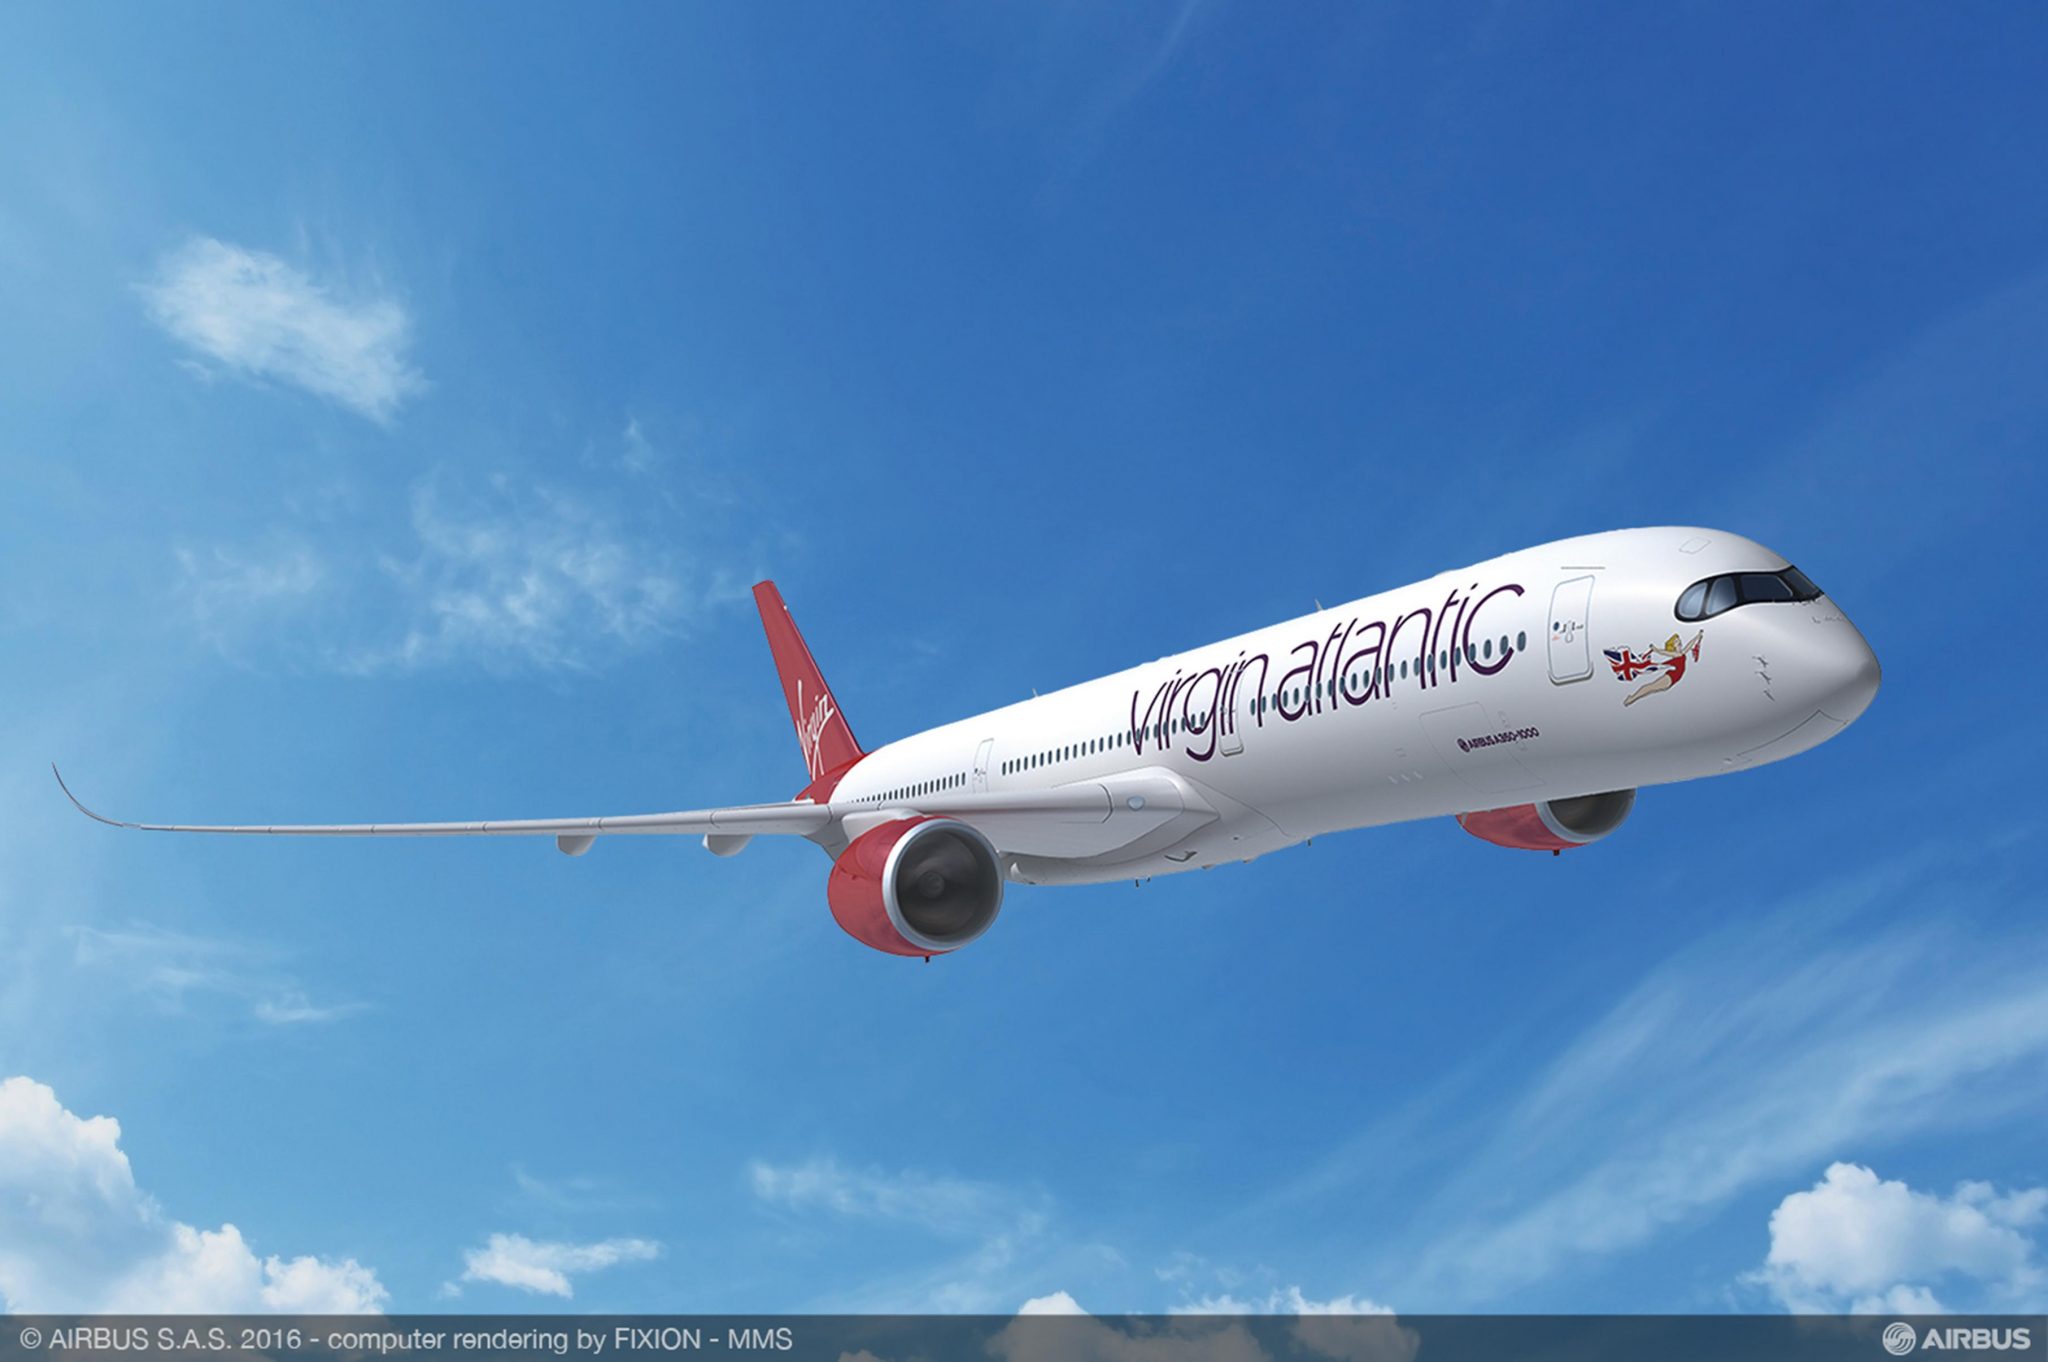 Virgin Atlantic restarts London to Mumbai service